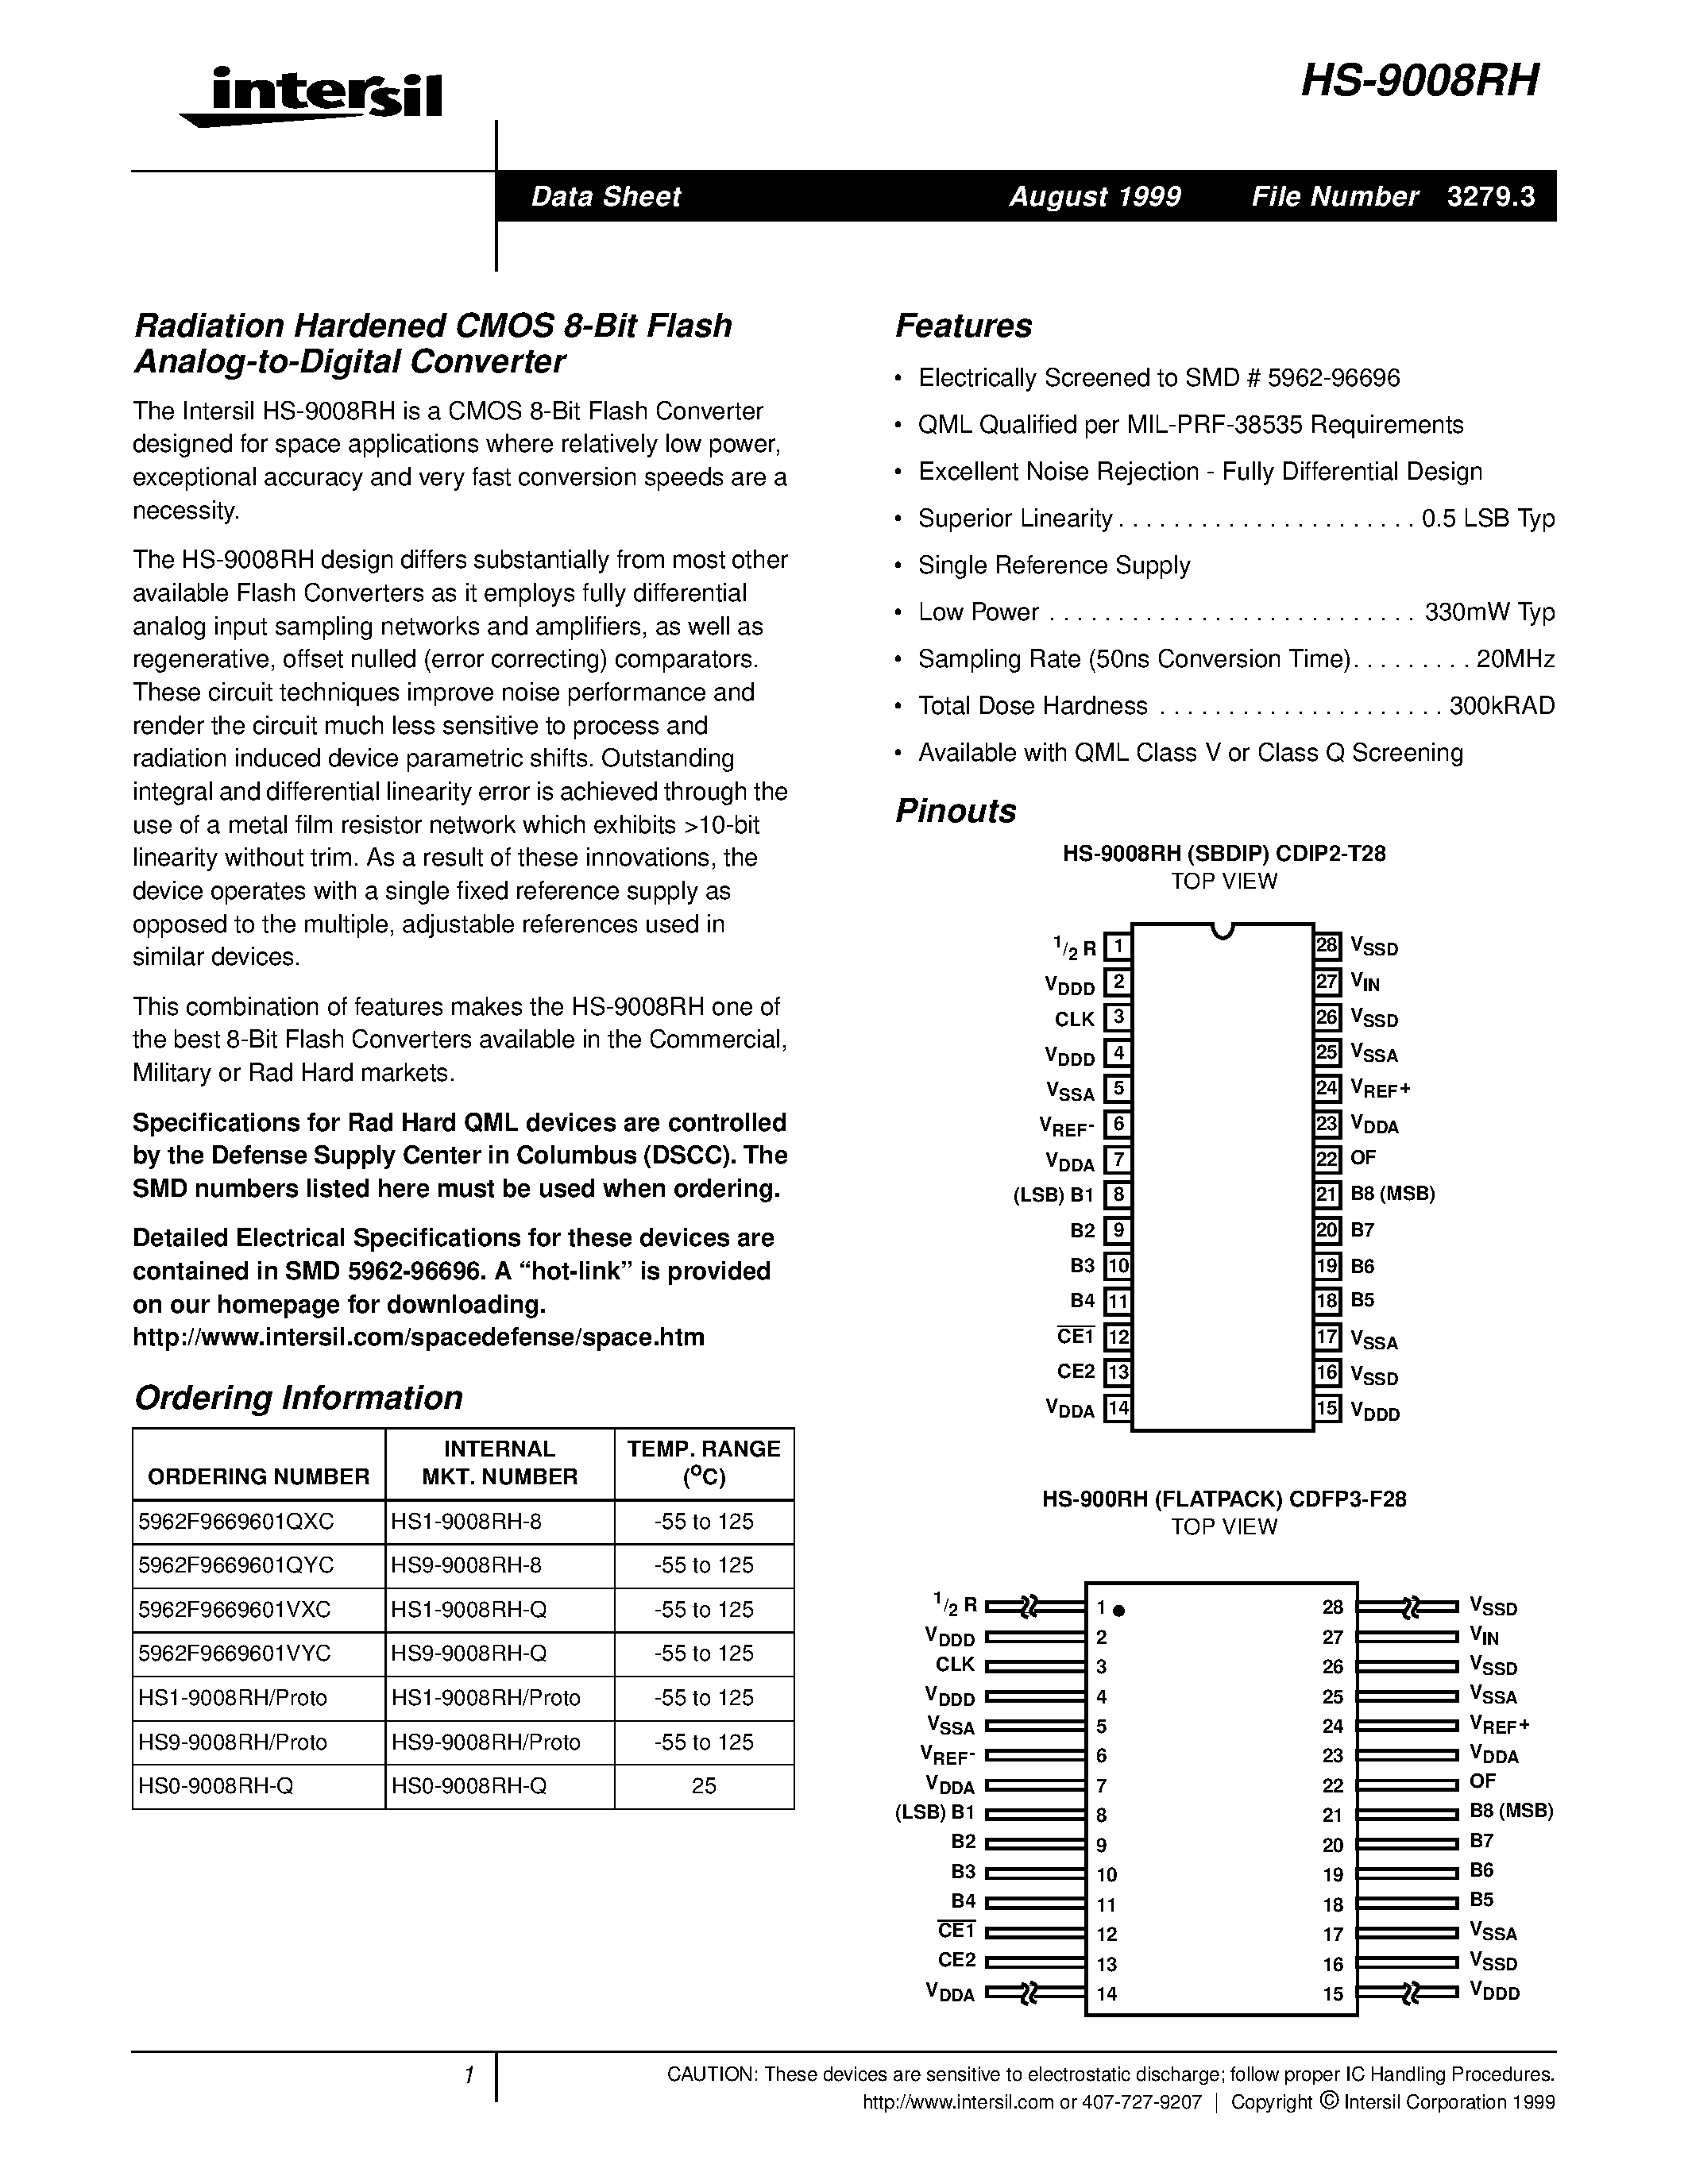 Даташит HS1-9008RH-8 - Radiation Hardened CMOS 8-Bit Flash Analog-to-Digital Converter страница 1